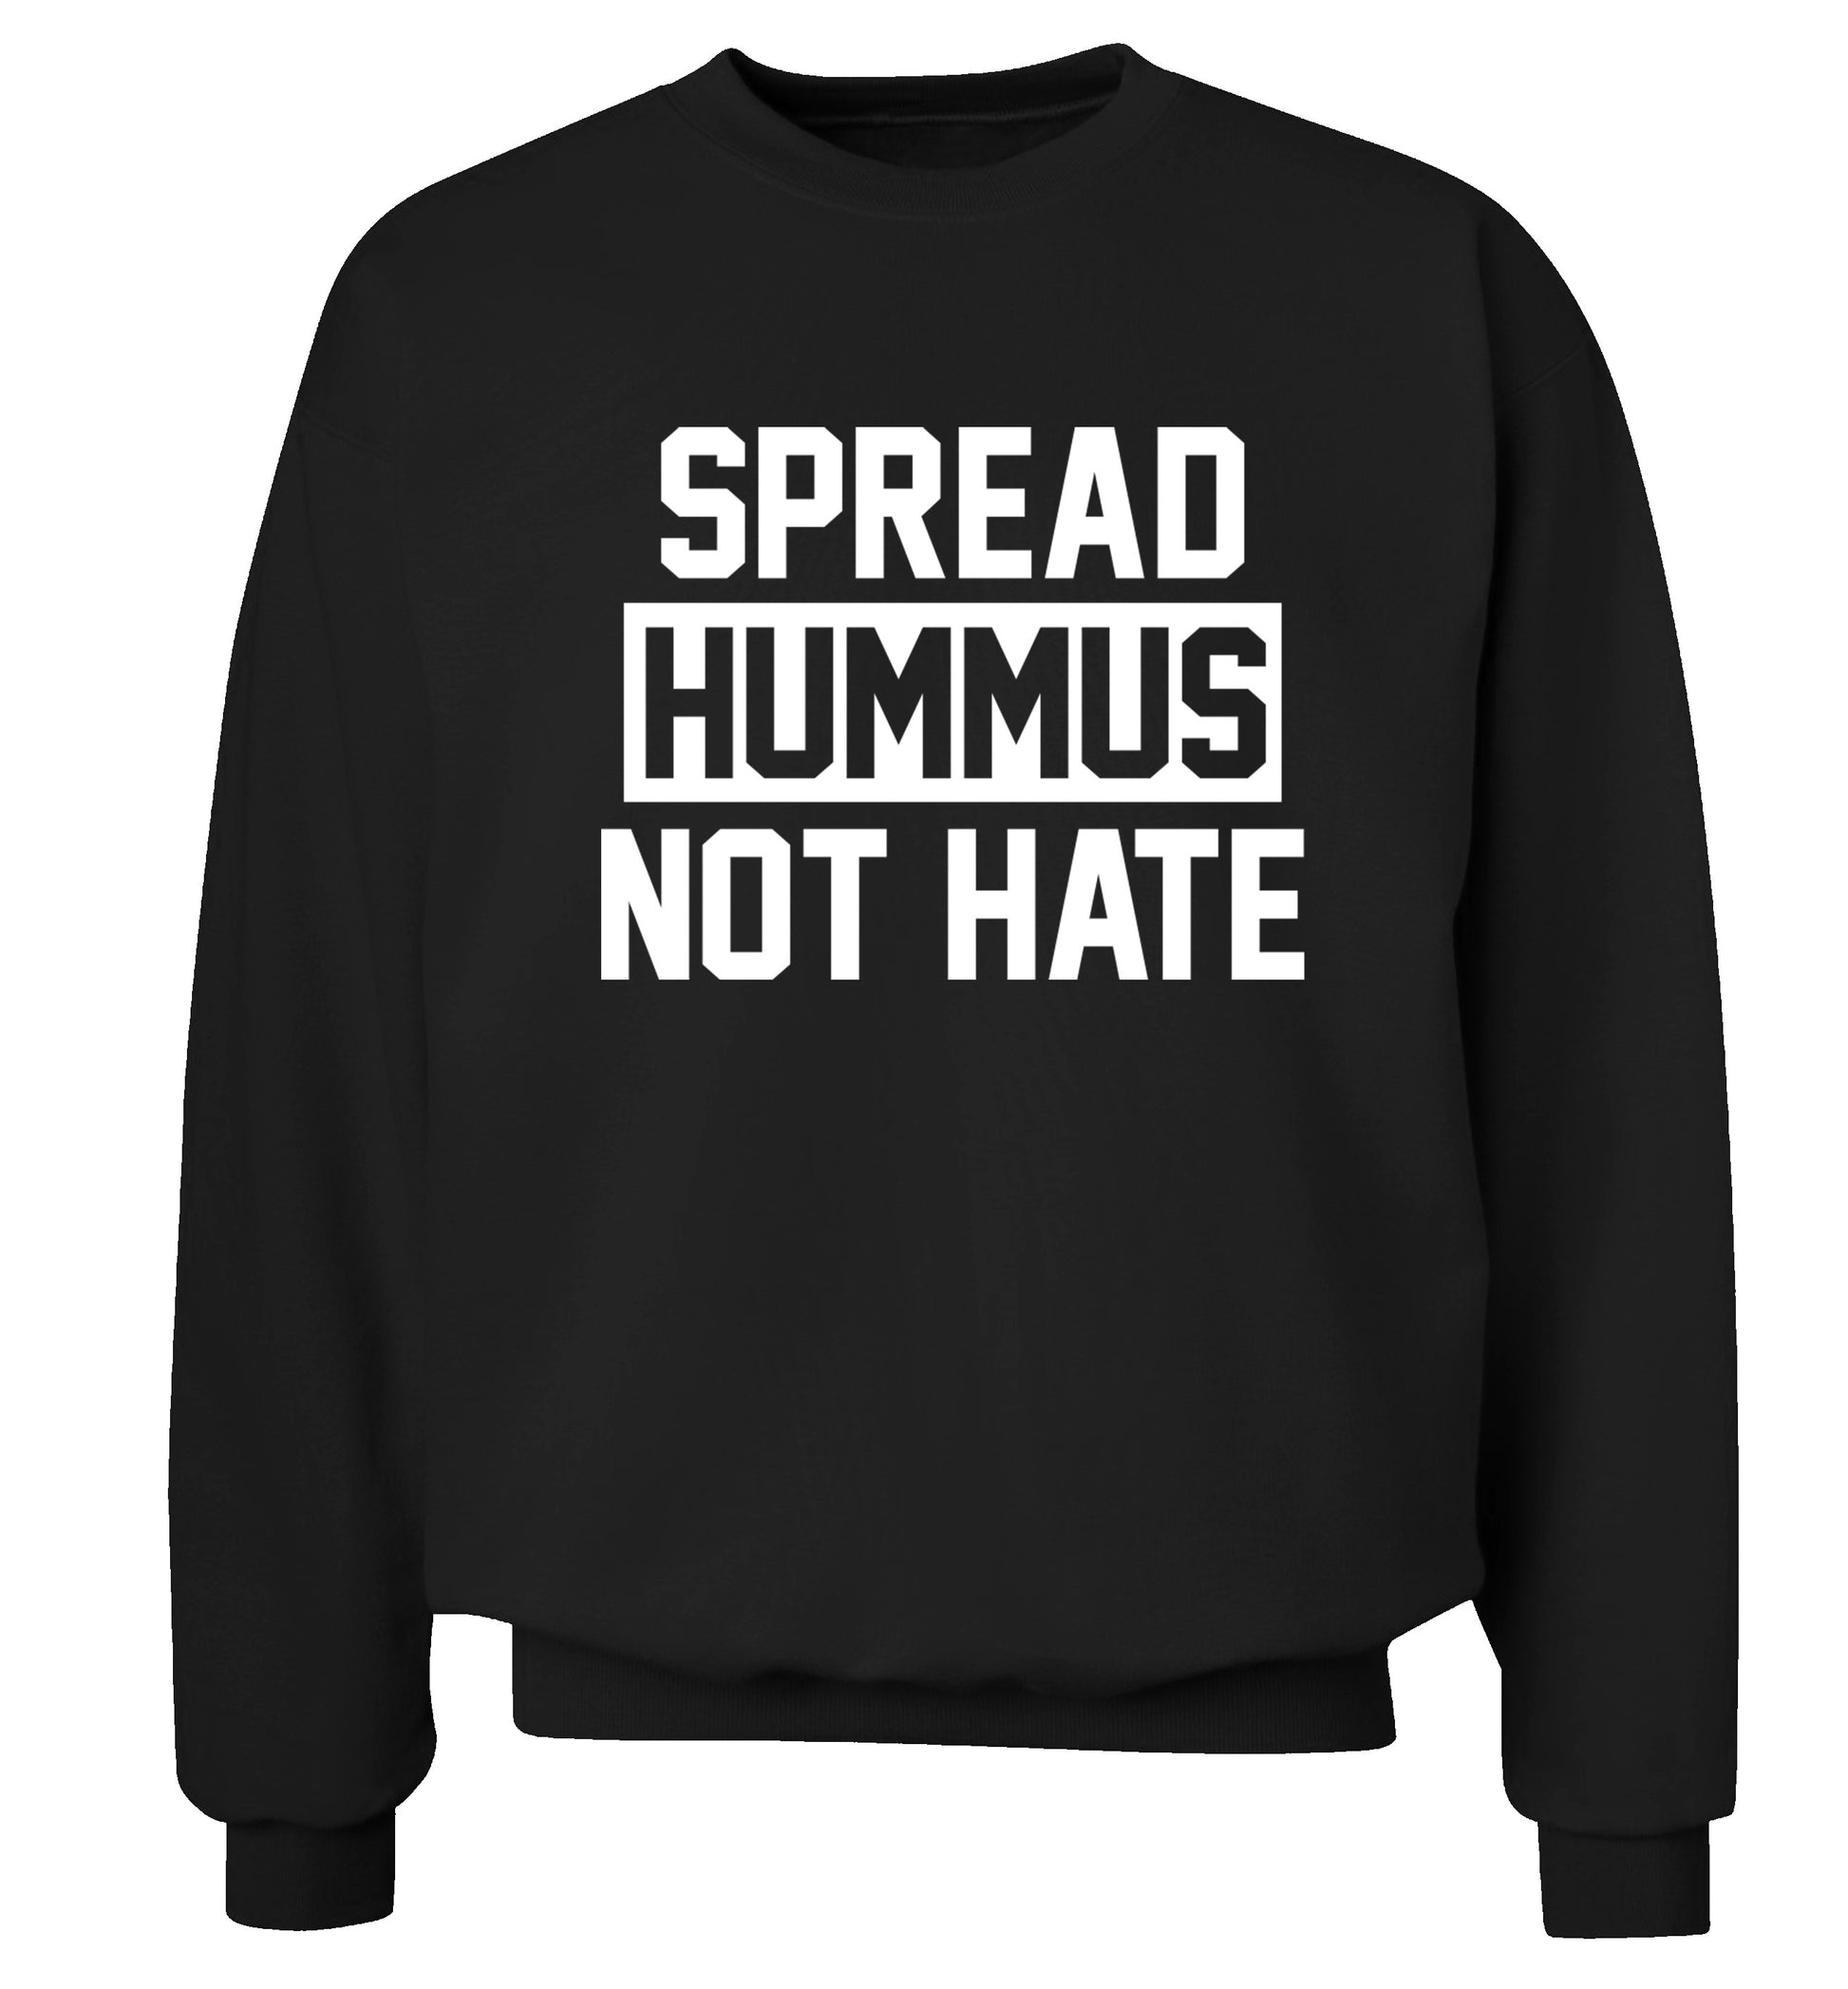 Spread hummus not hate Adult's unisex black Sweater 2XL